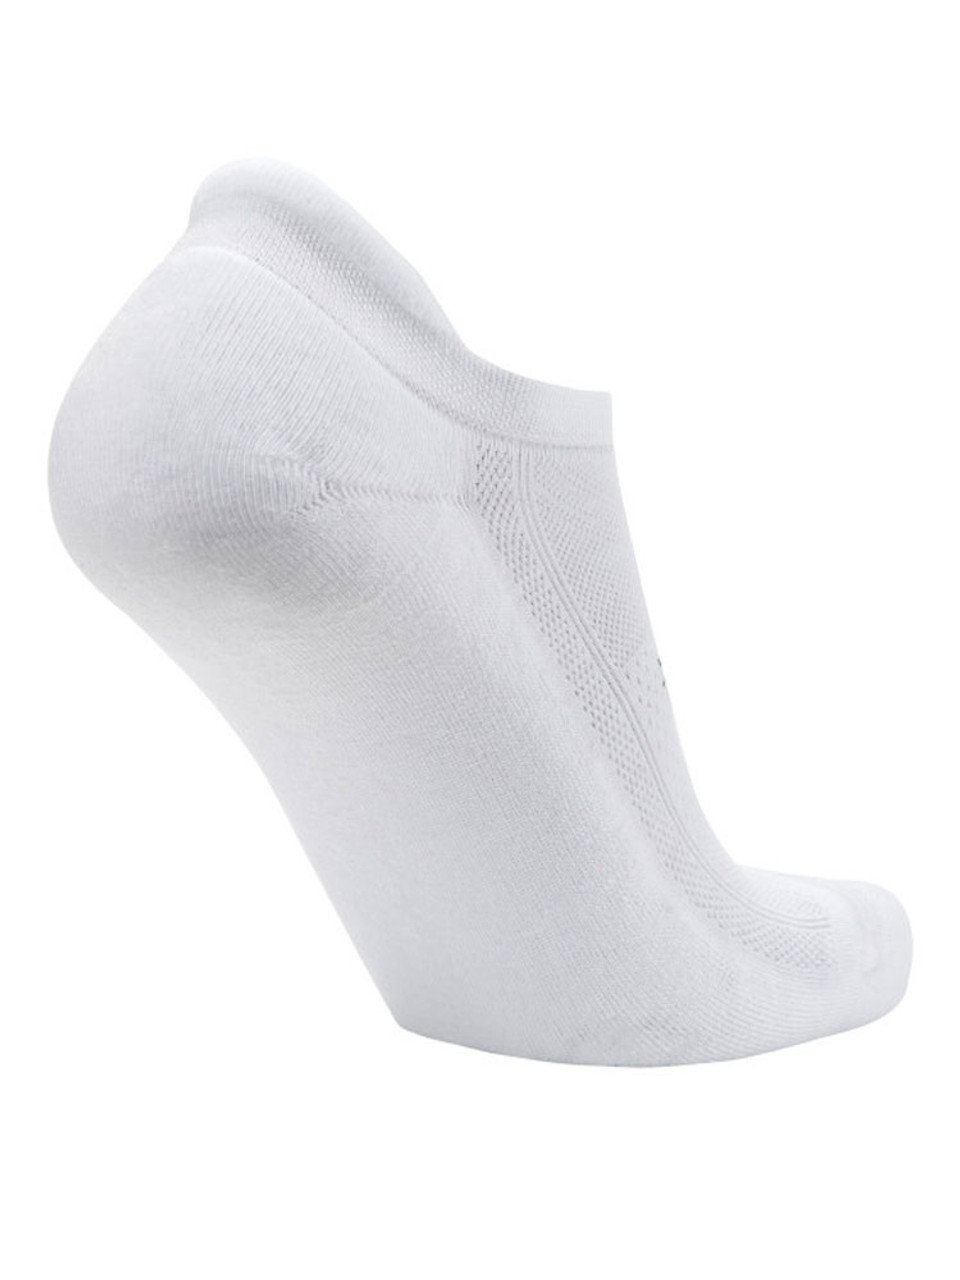 Balega Hidden Comfort Socks - White - Mens | GolfBox